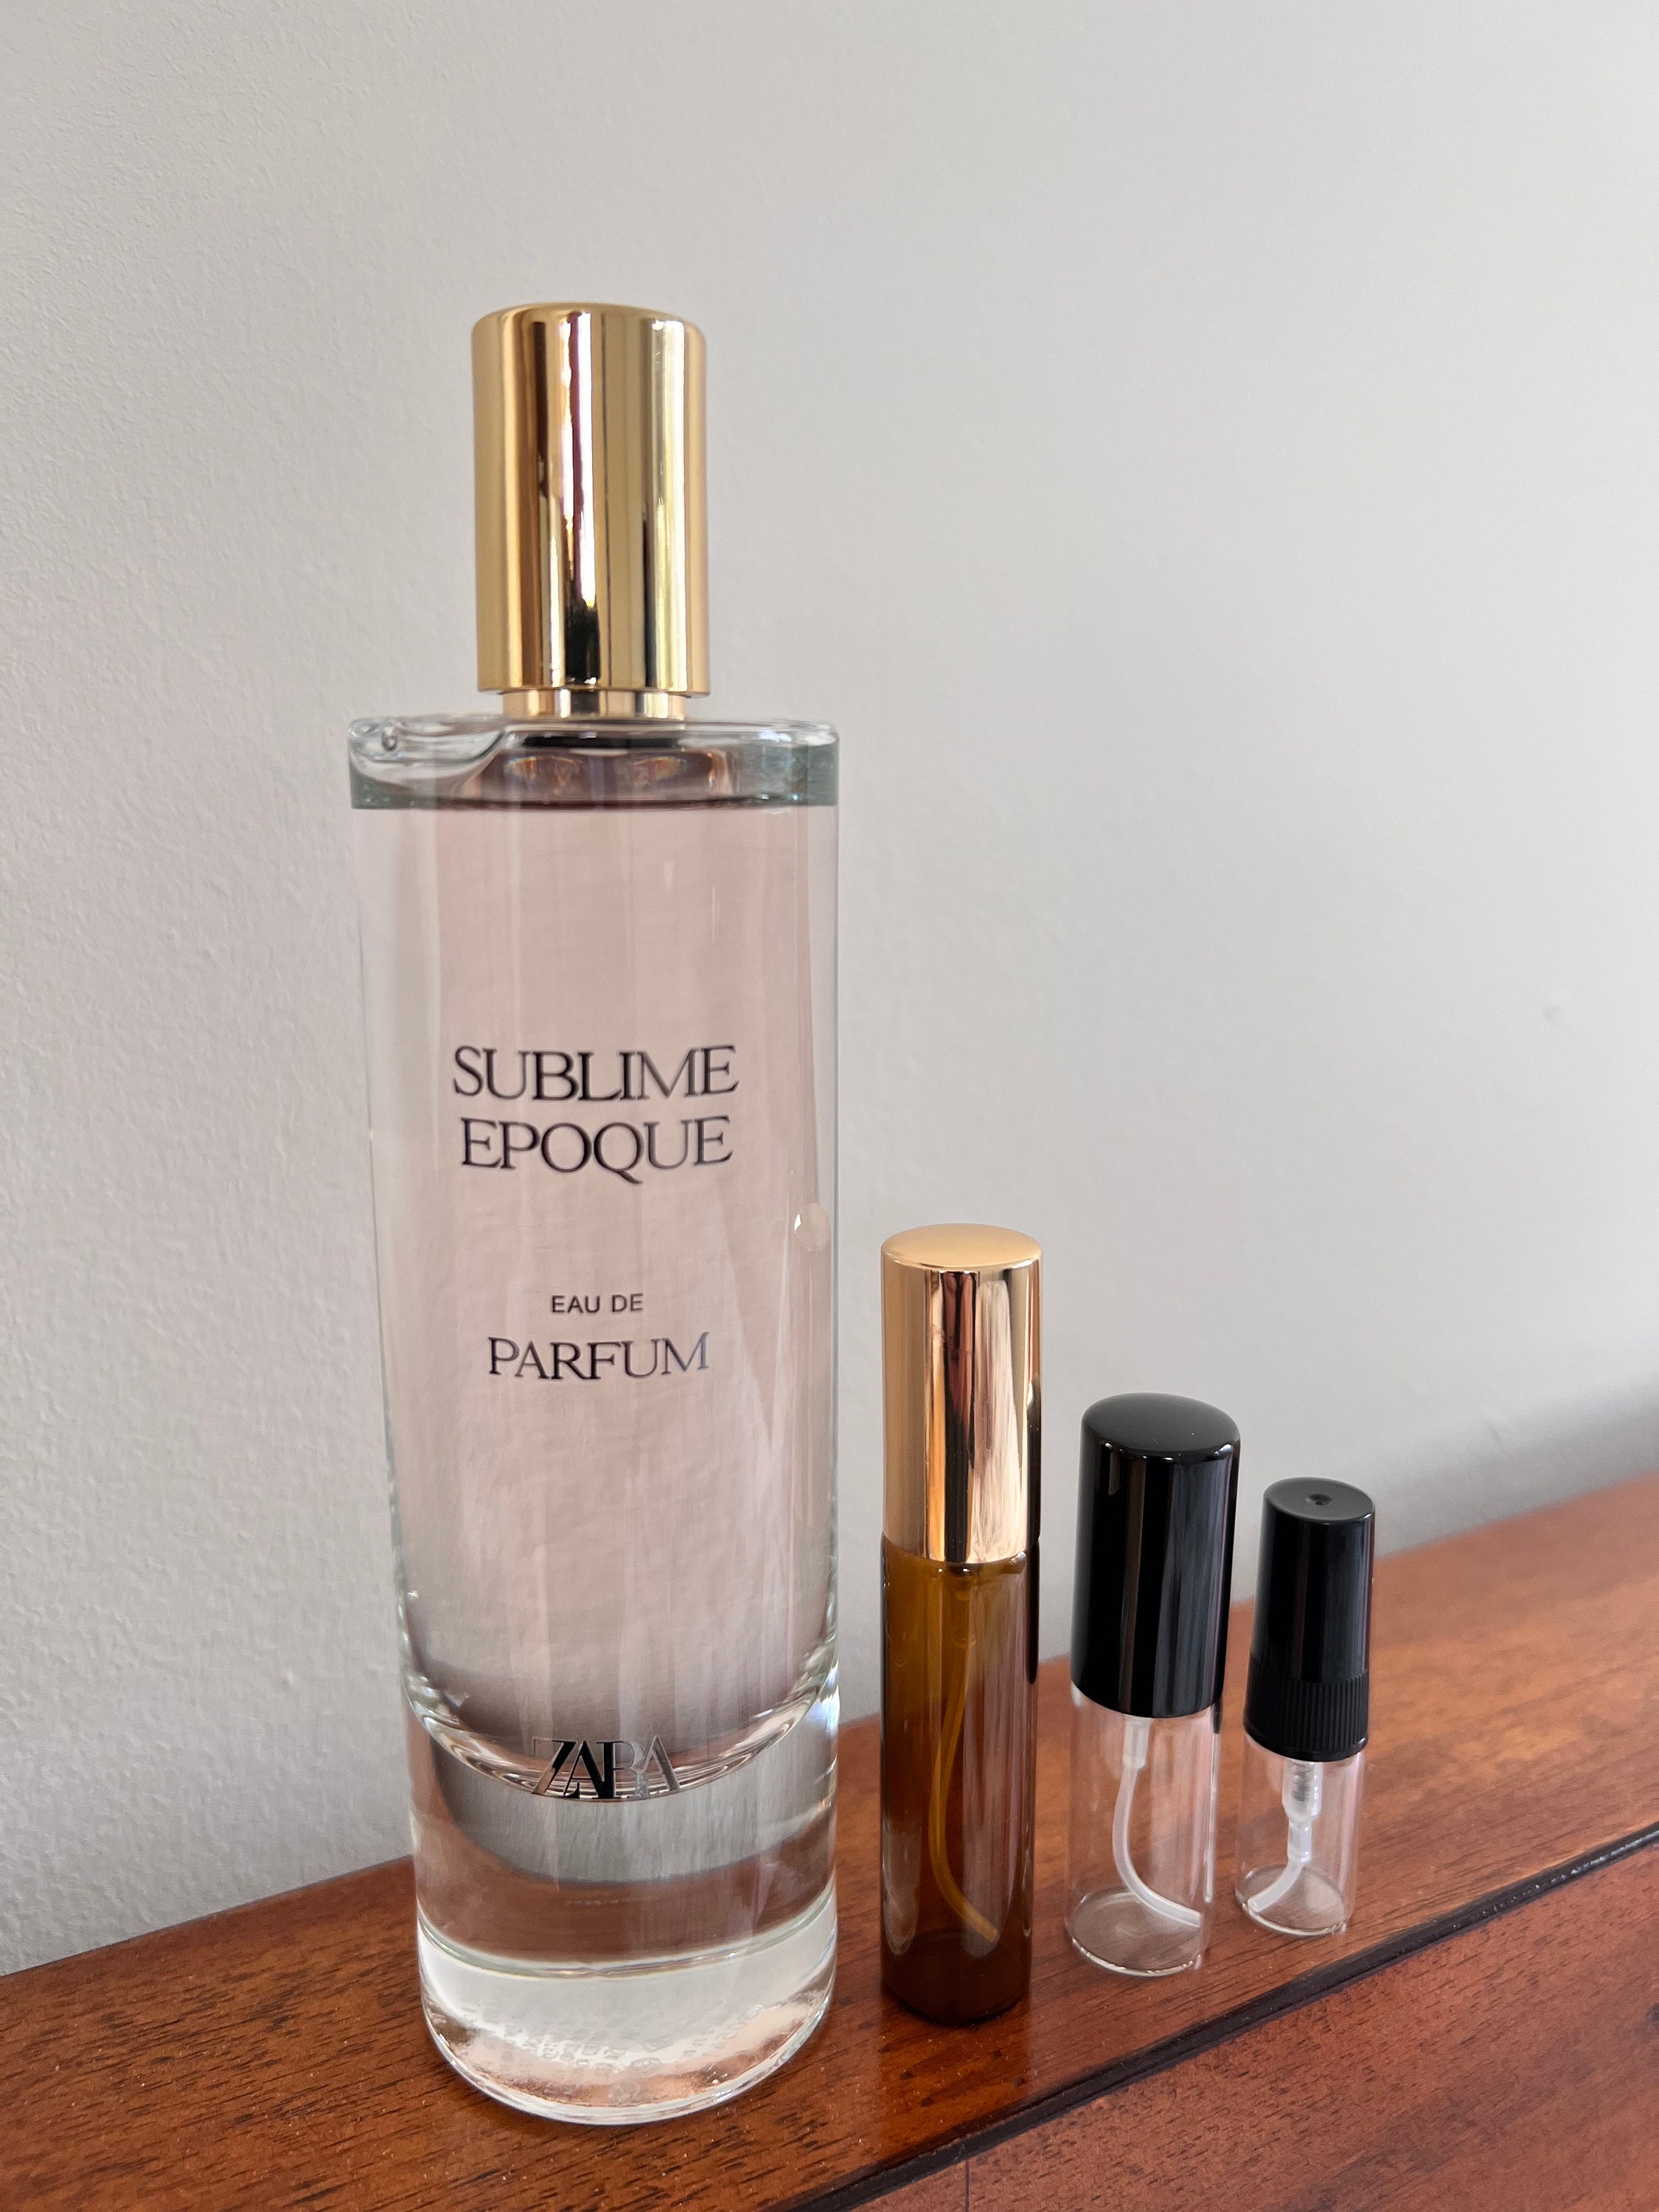 ZARA SUBLIME EPOQUE original Perfume Samples - Etsy